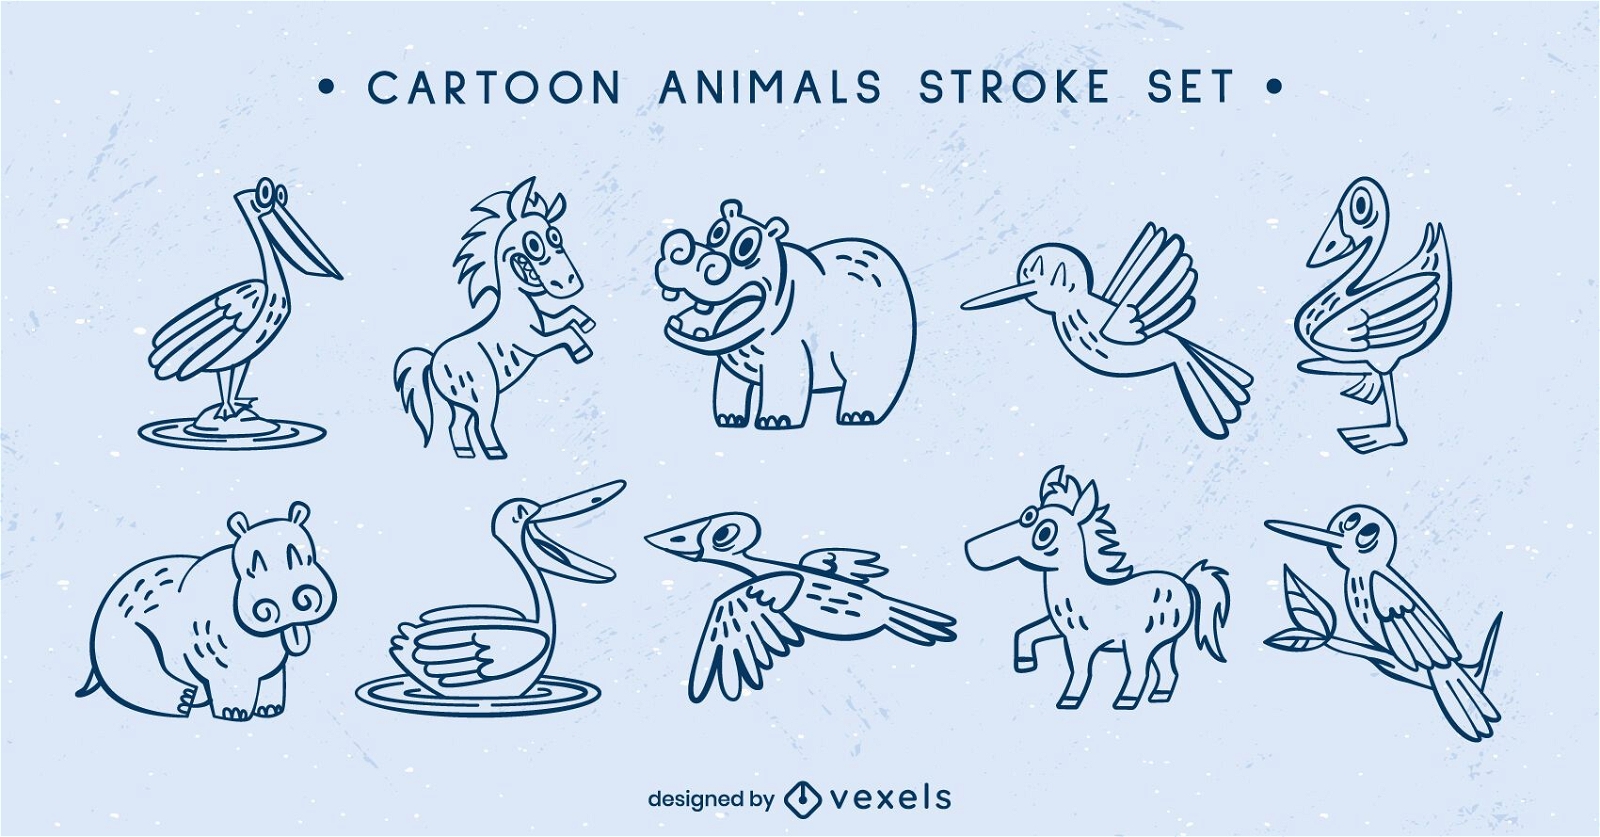 Cartoon animals stroke pack